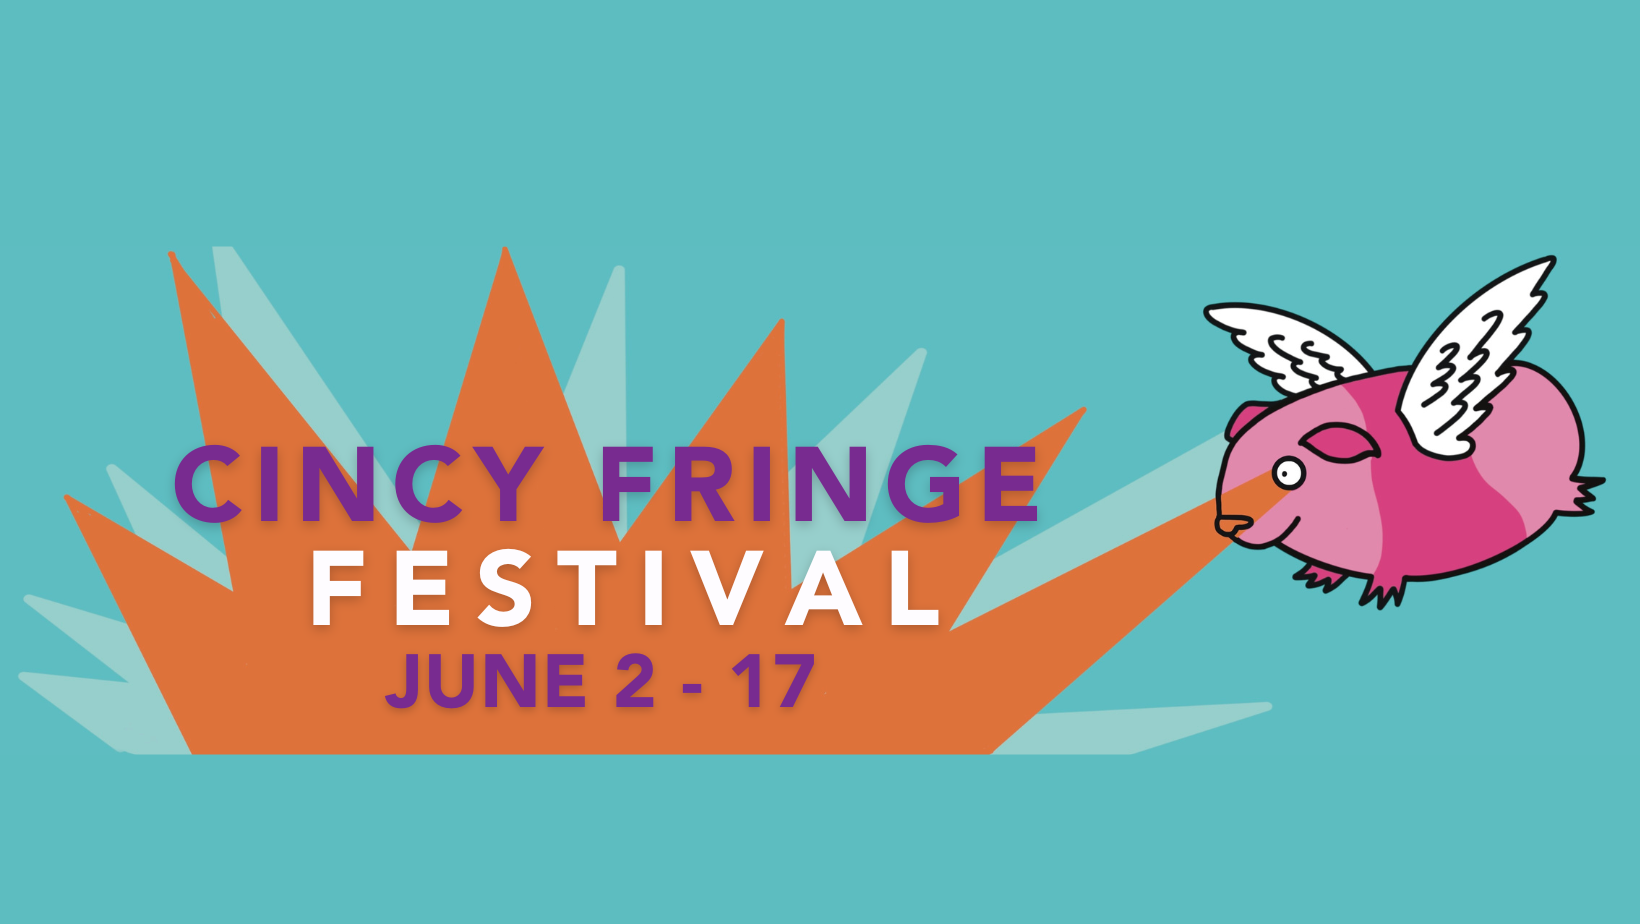 Cincinnati Fringe Festival Promotional Image